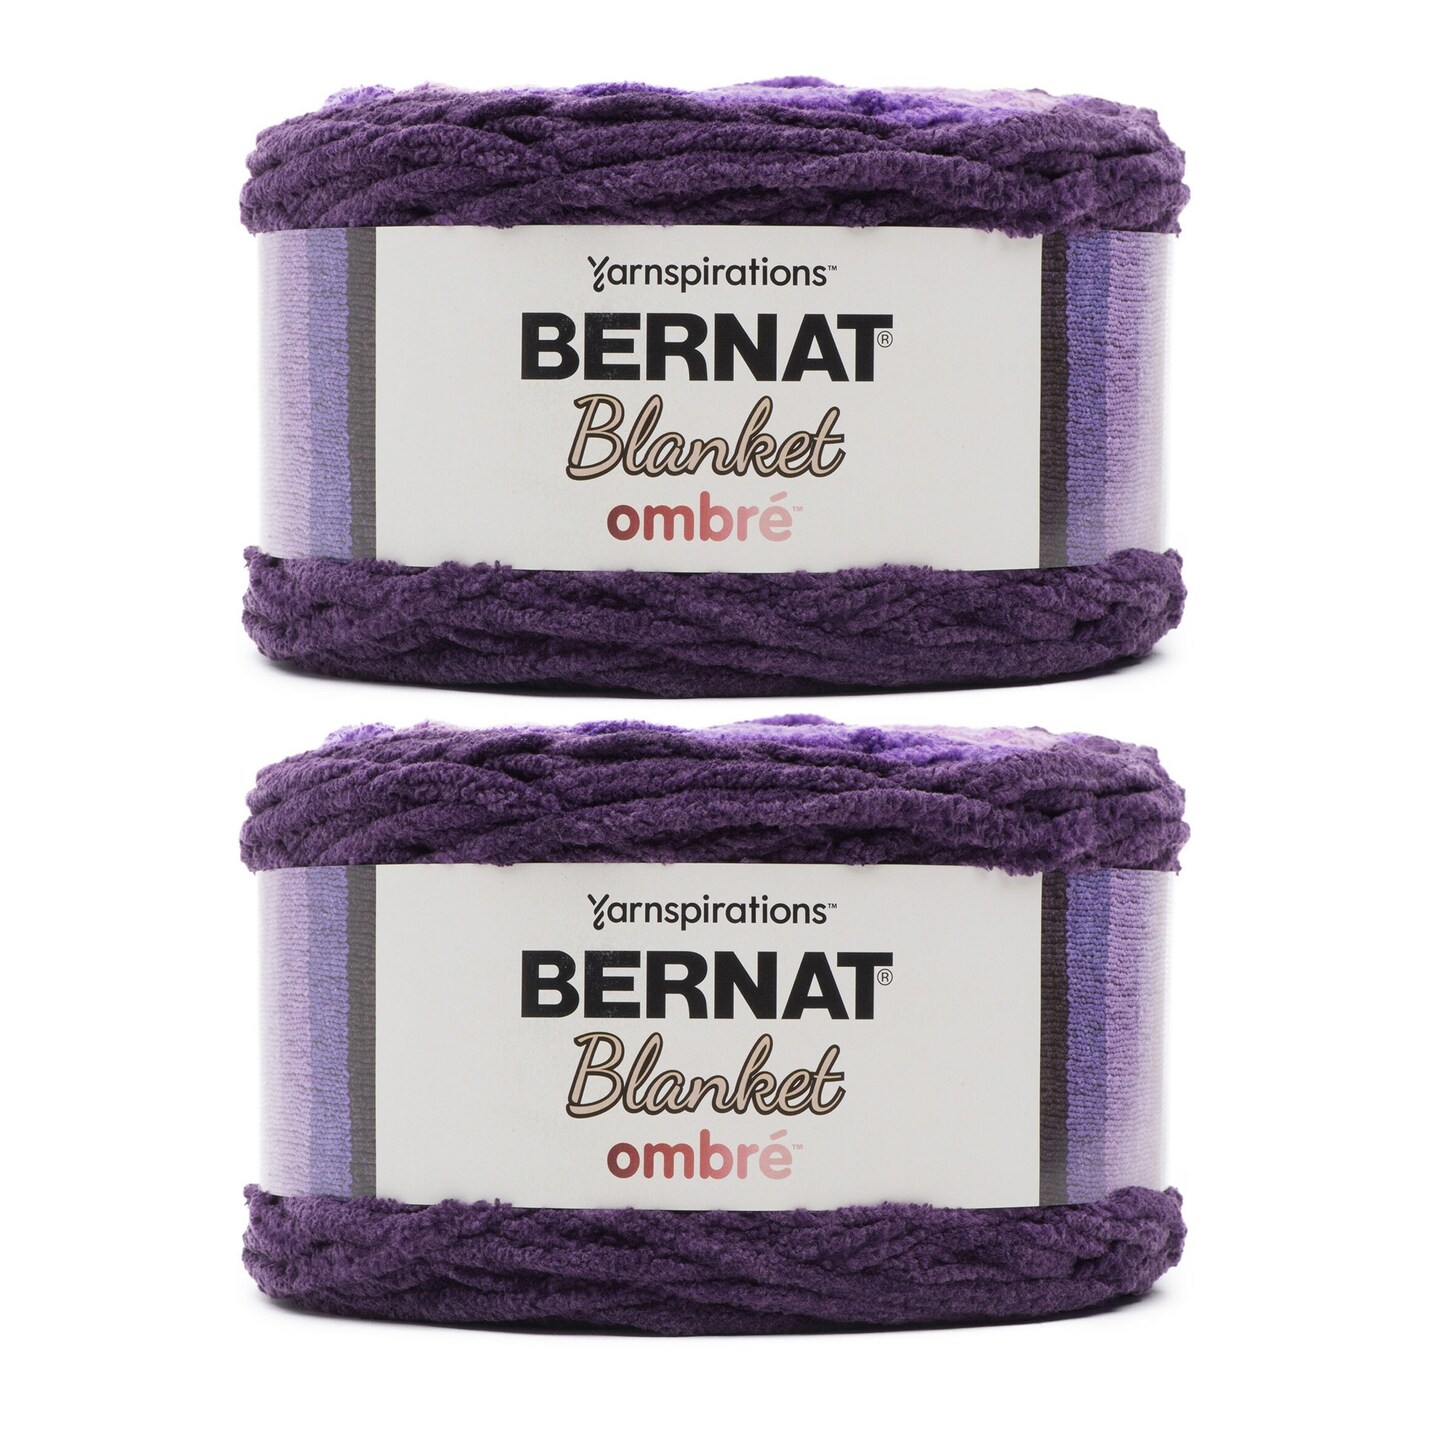 Bernat Blanket Ombre Cool Purple Ombre Yarn - 2 Pack of 300g/10.5oz -  Polyester - 6 Super Bulky - 220 Yards - Knitting/Crochet